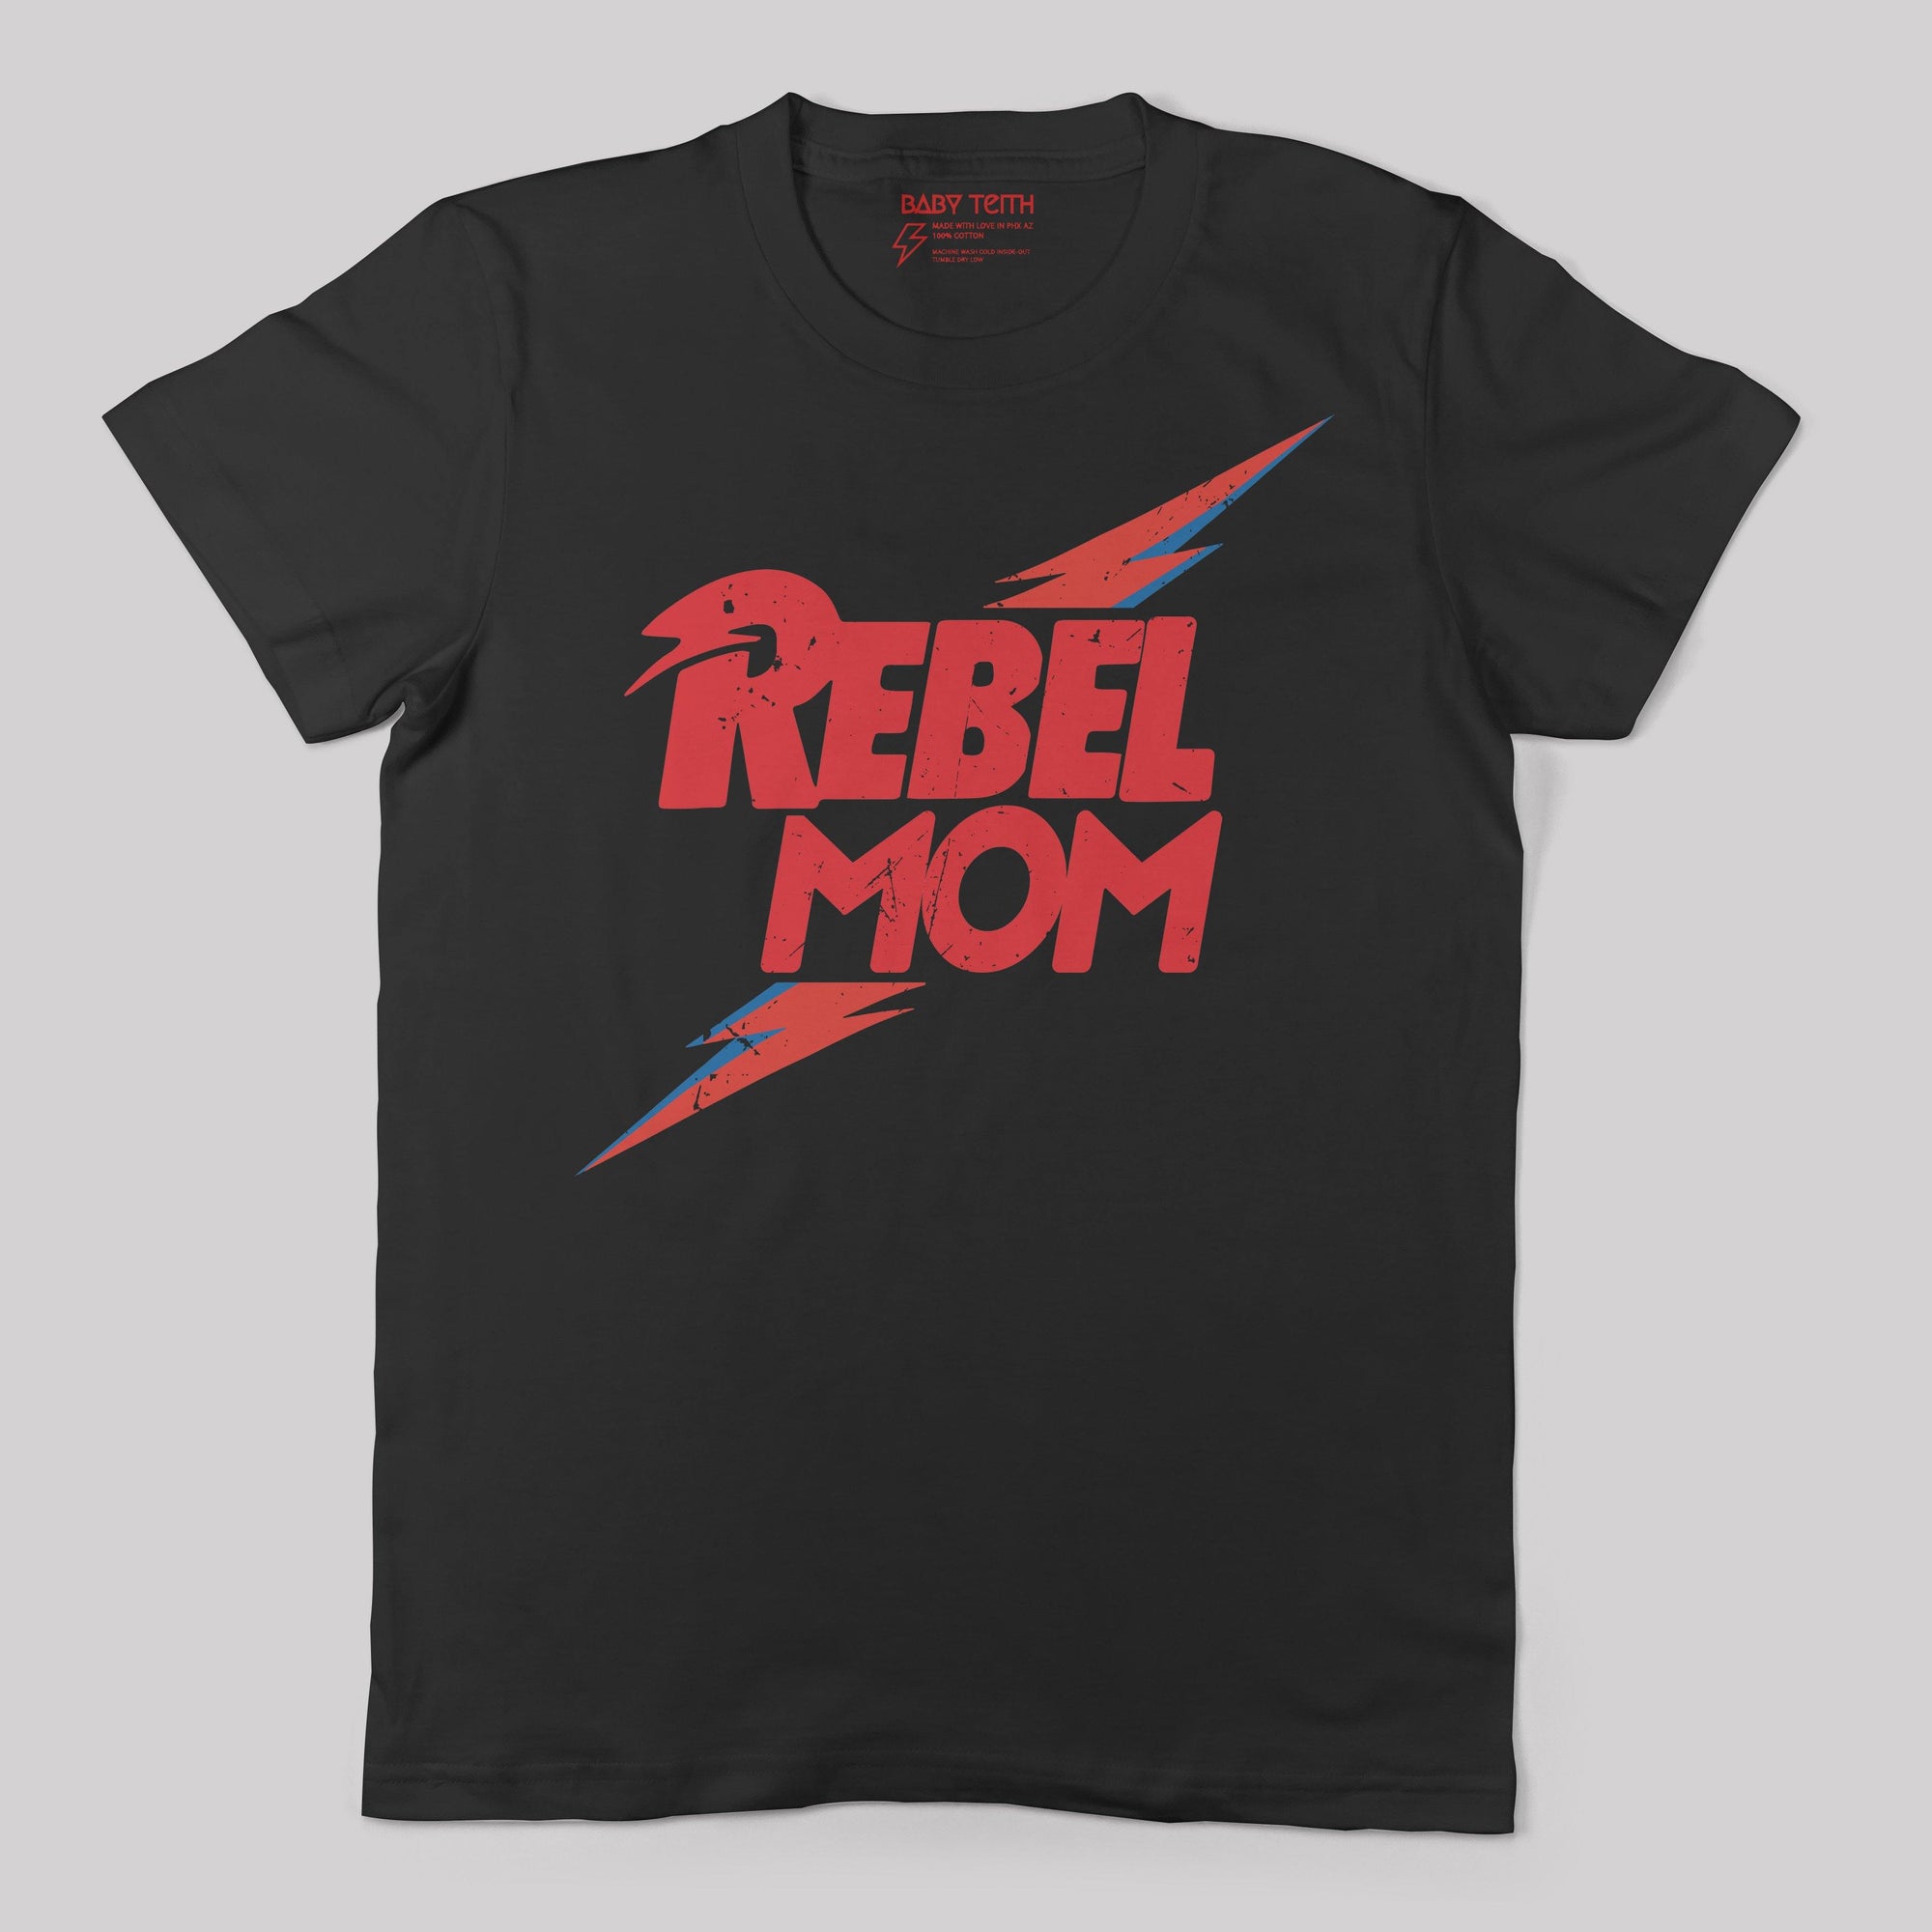 Rebel Mom Tee - Unisex Fit (2 Colors) - Baby Teith